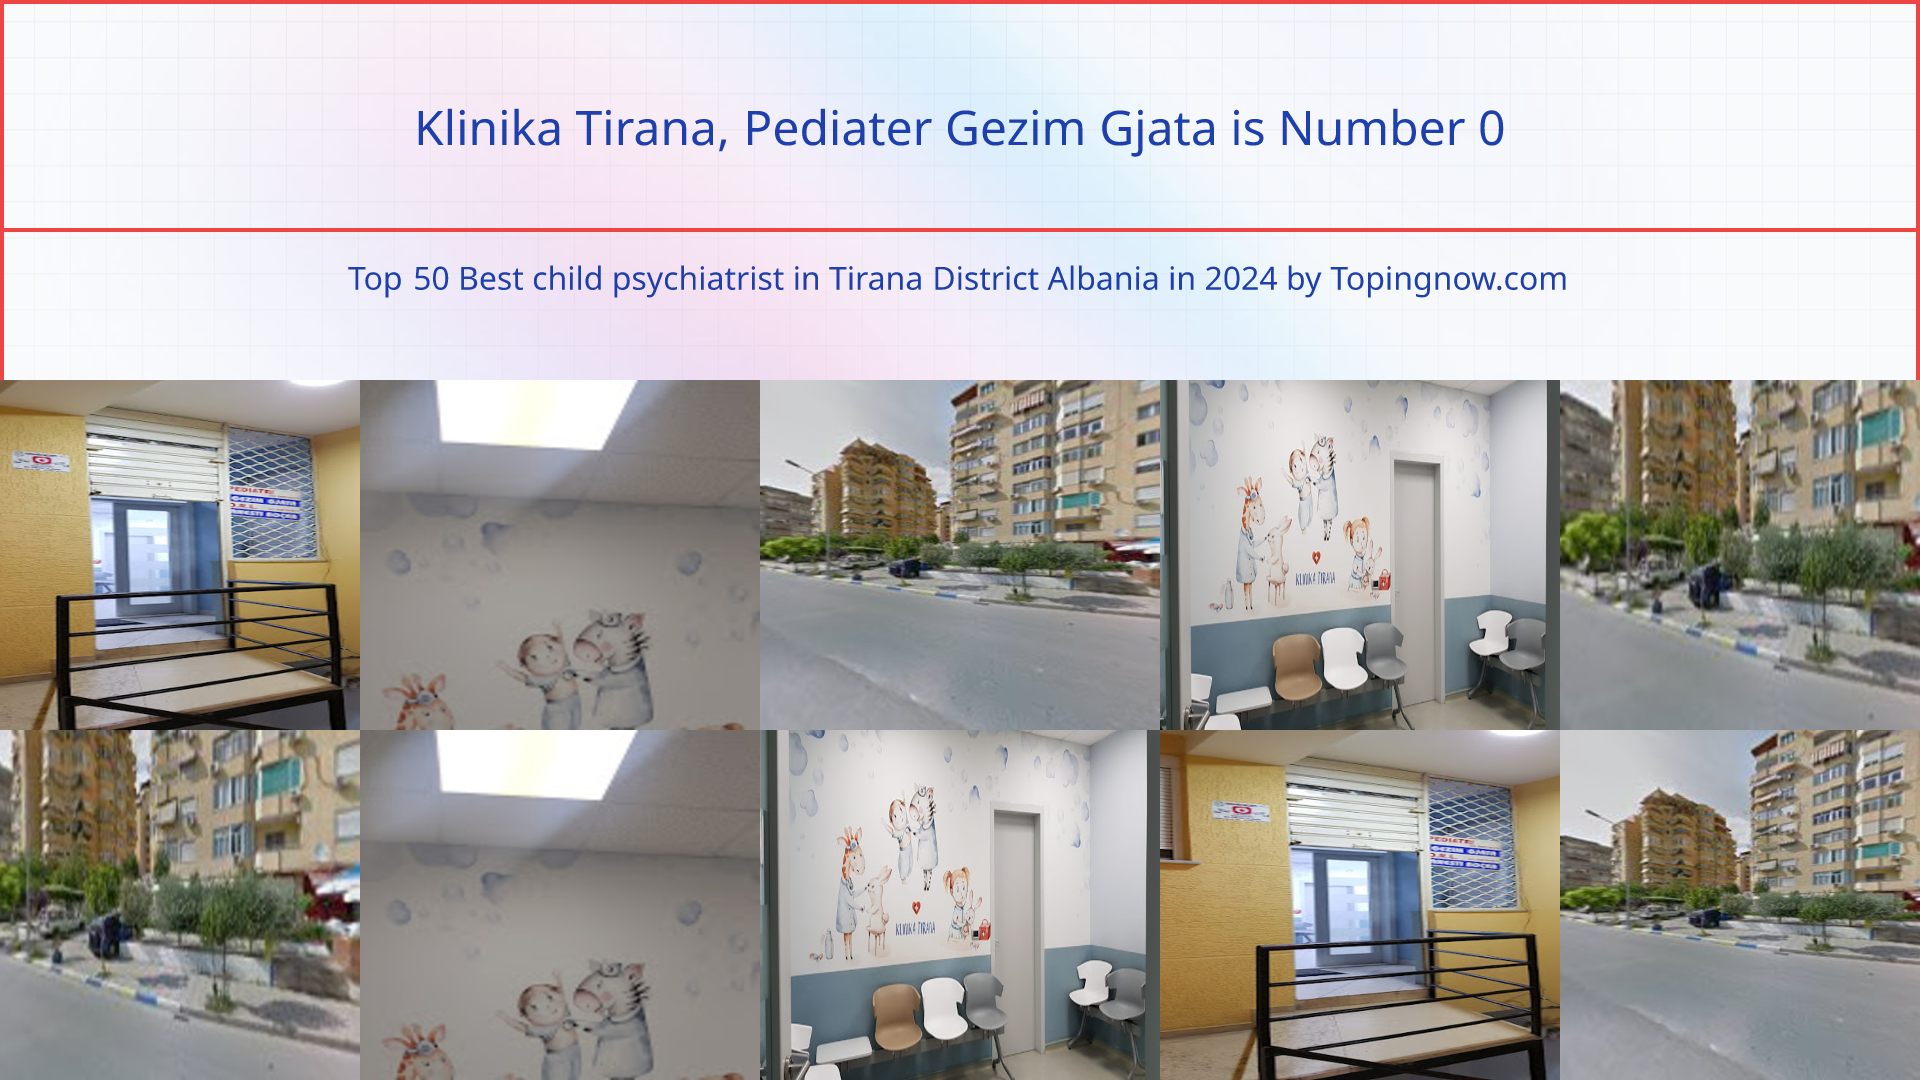 Klinika Tirana, Pediater Gezim Gjata: Top 50 Best child psychiatrist in Tirana District Albania in 2024